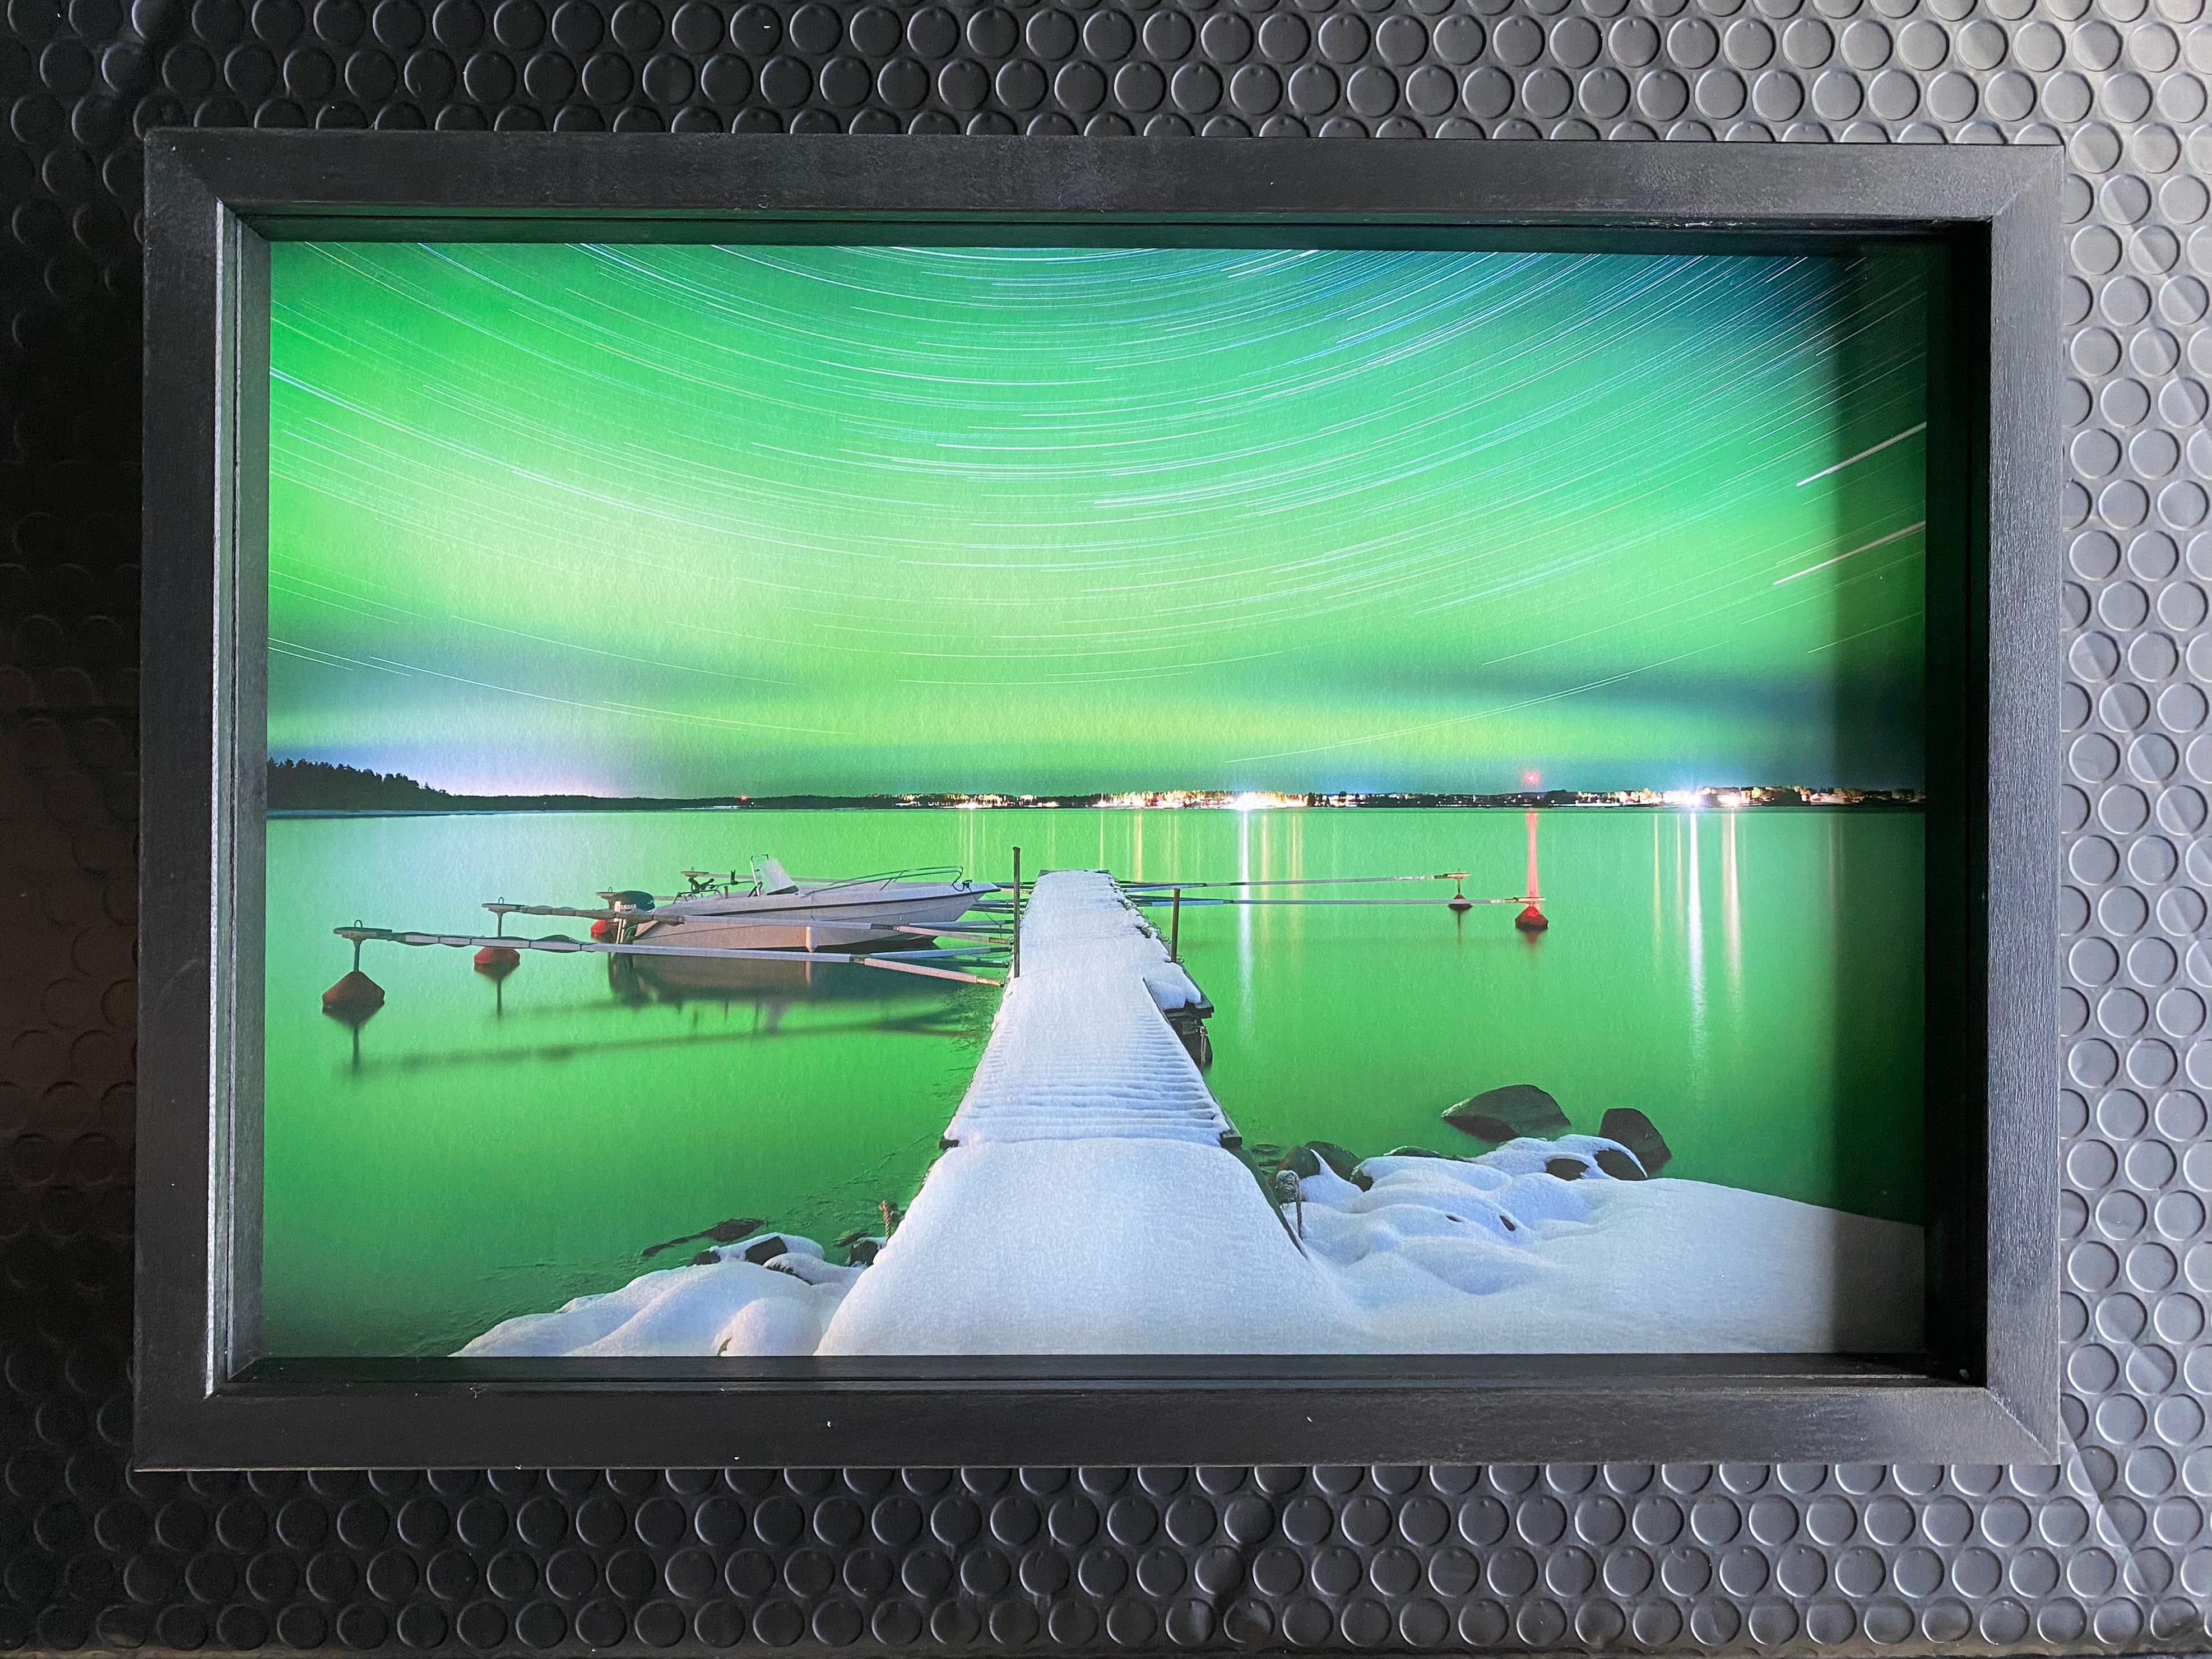 Anna Dobrovolskaya-Mints Color Photograph - Pier in Northern Lights, Sweden. Green night photo, black frame, museum glass